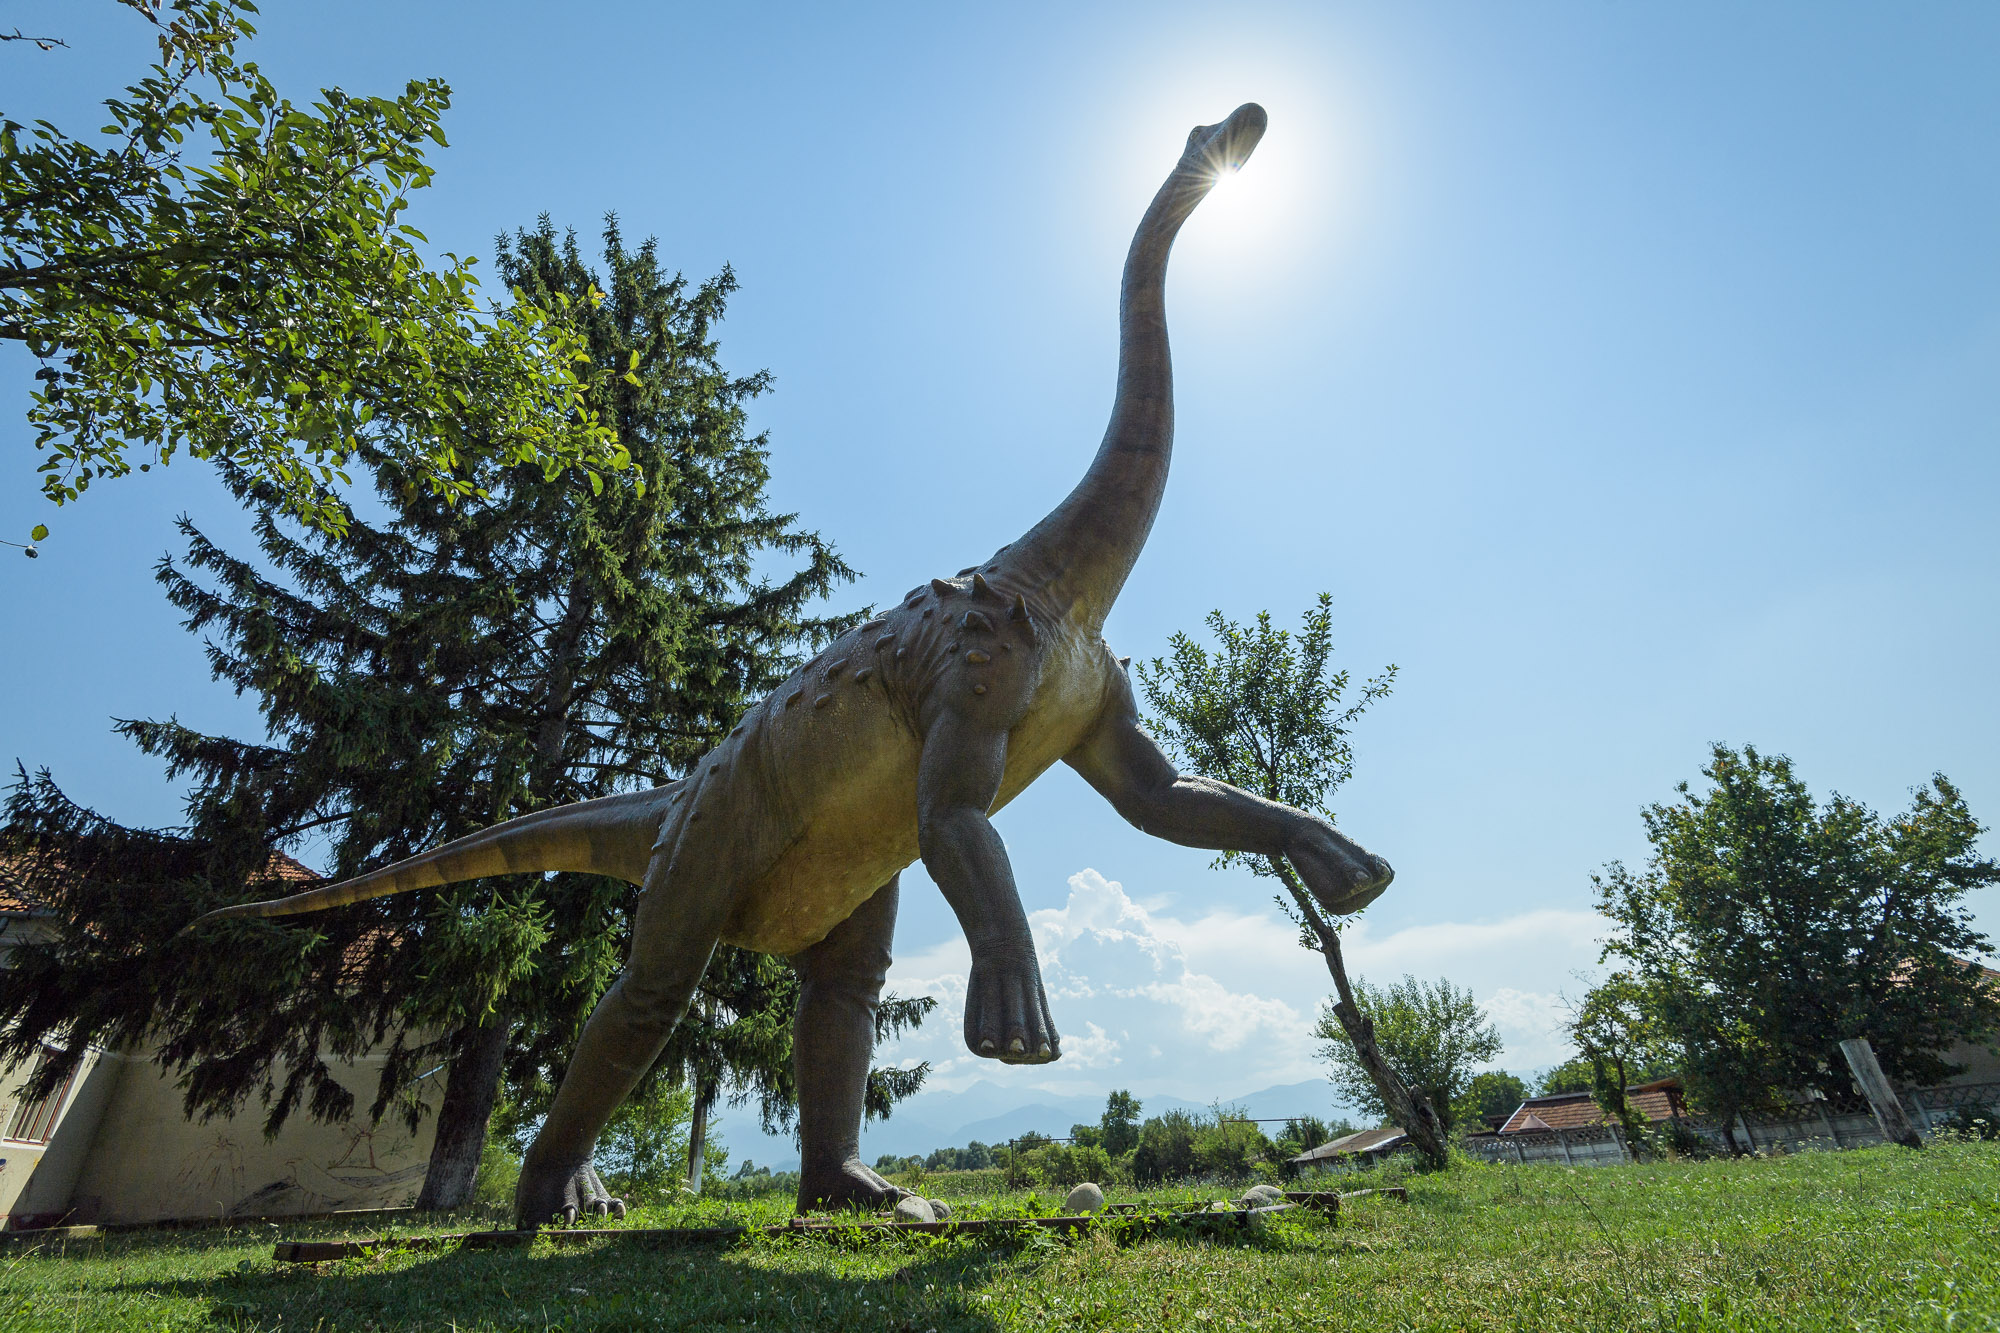 A real-life dwarf dinosaur replica